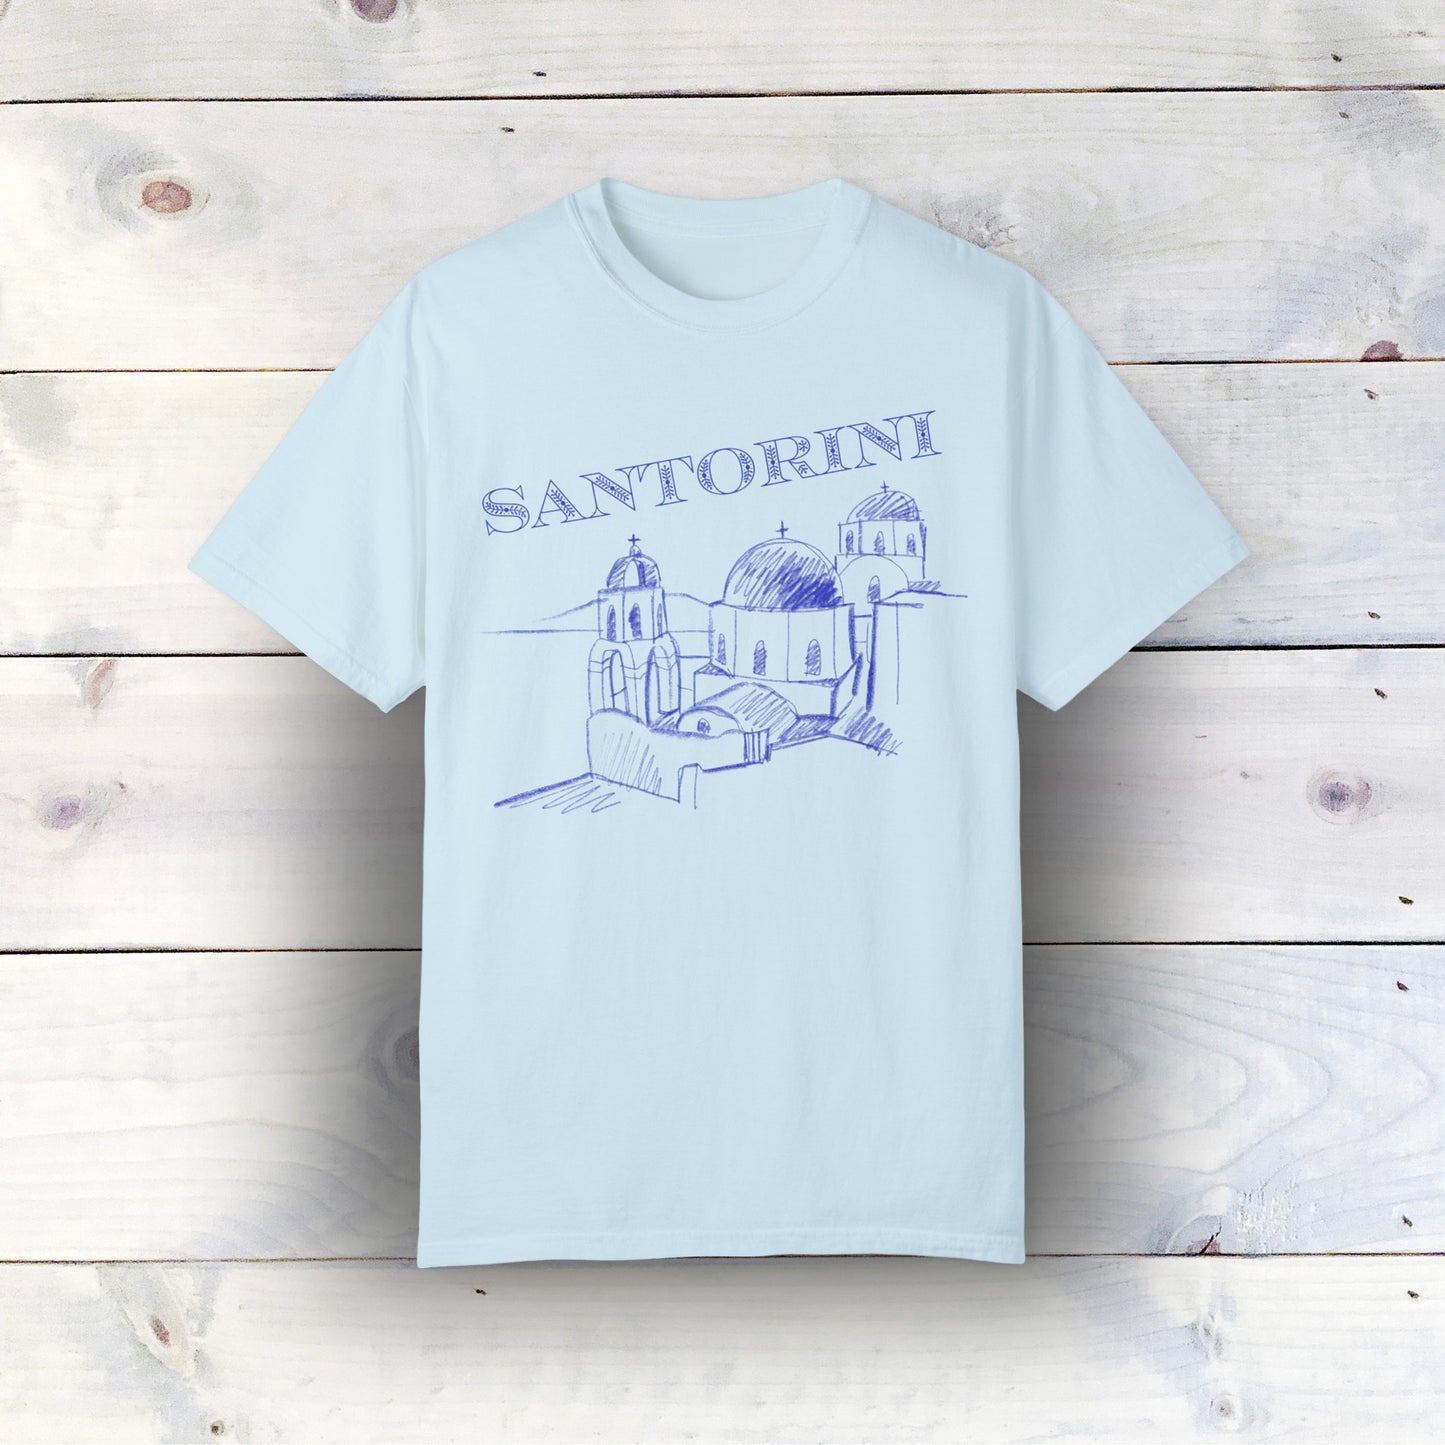 Santorini Coastline Graphic T-Shirt - Comfort Colors 1717, 100% Ring-Spun Cotton, Relaxed Fit